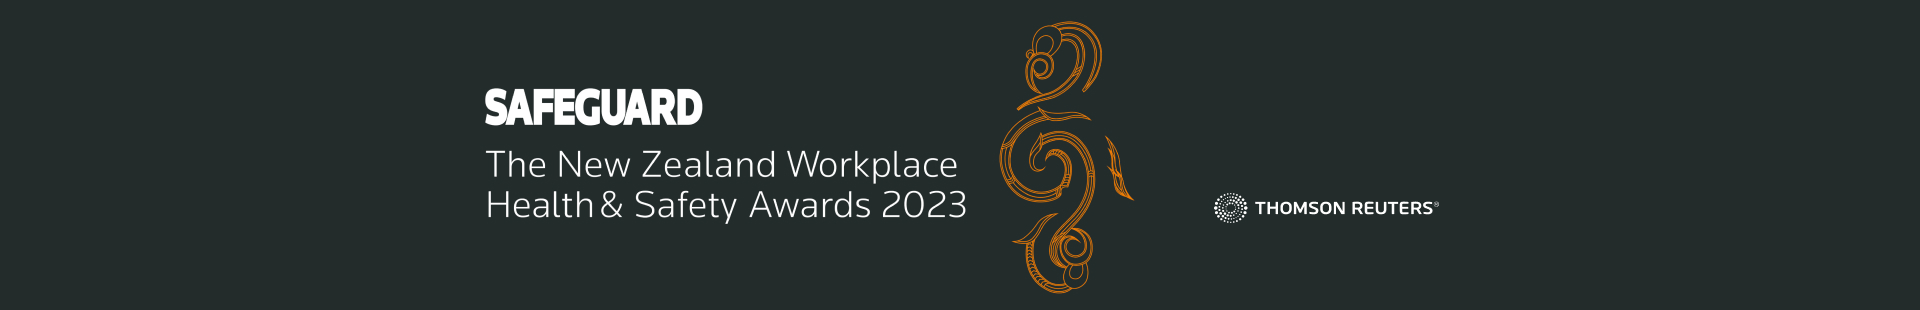 New Zealand Workplace Health & Safety Awards 2023 - Gala dinner & Awards Presentation